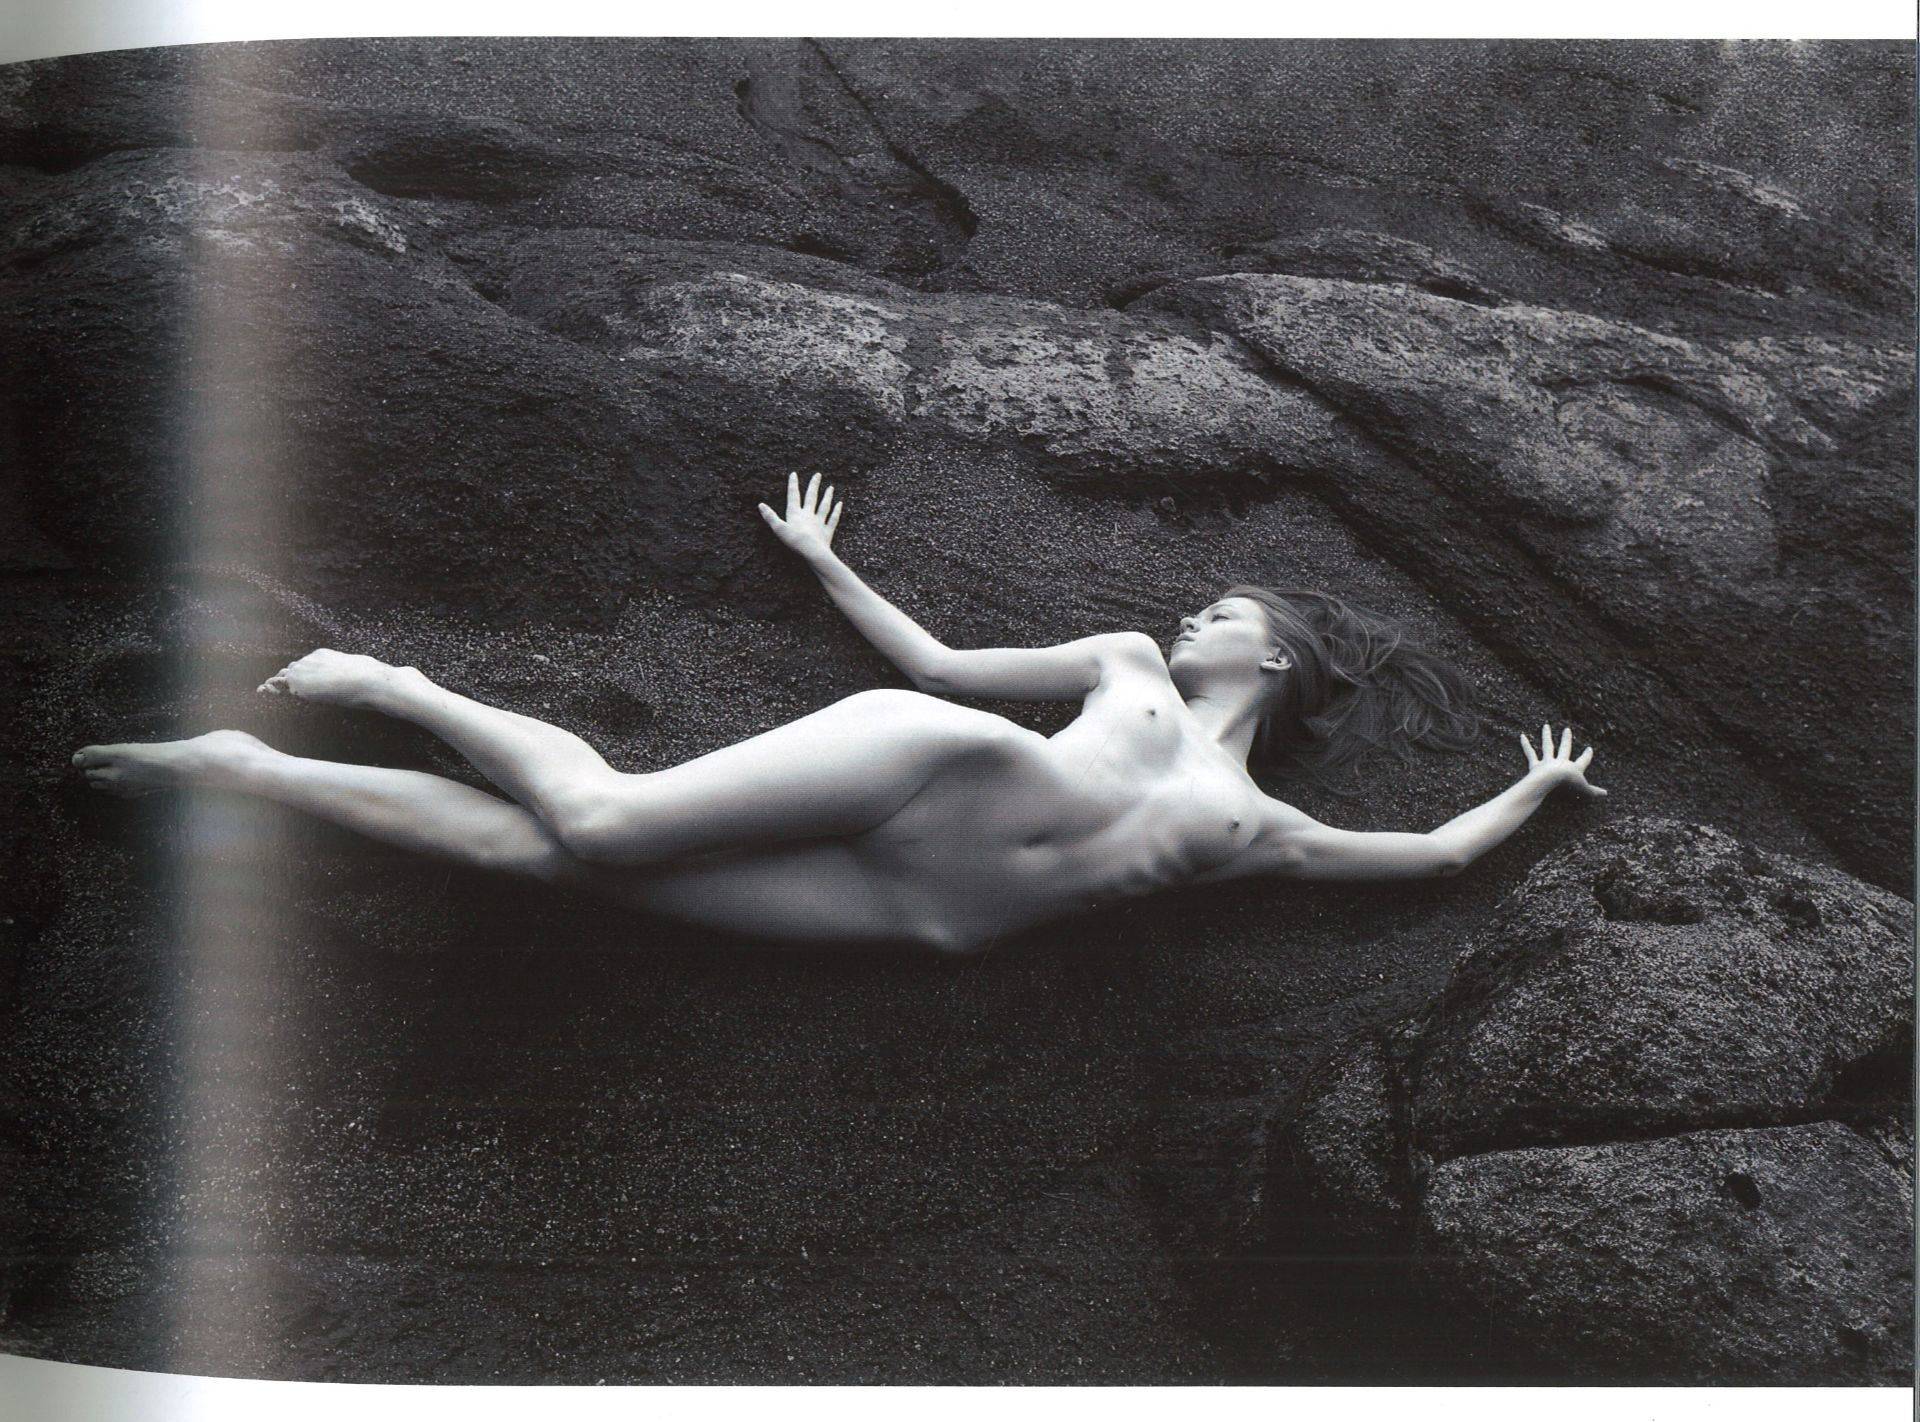 Erotica 1. "The Nude in Contemporary Photography". Verlag: art photo akt edition, 2014. Designed - Bild 2 aus 4